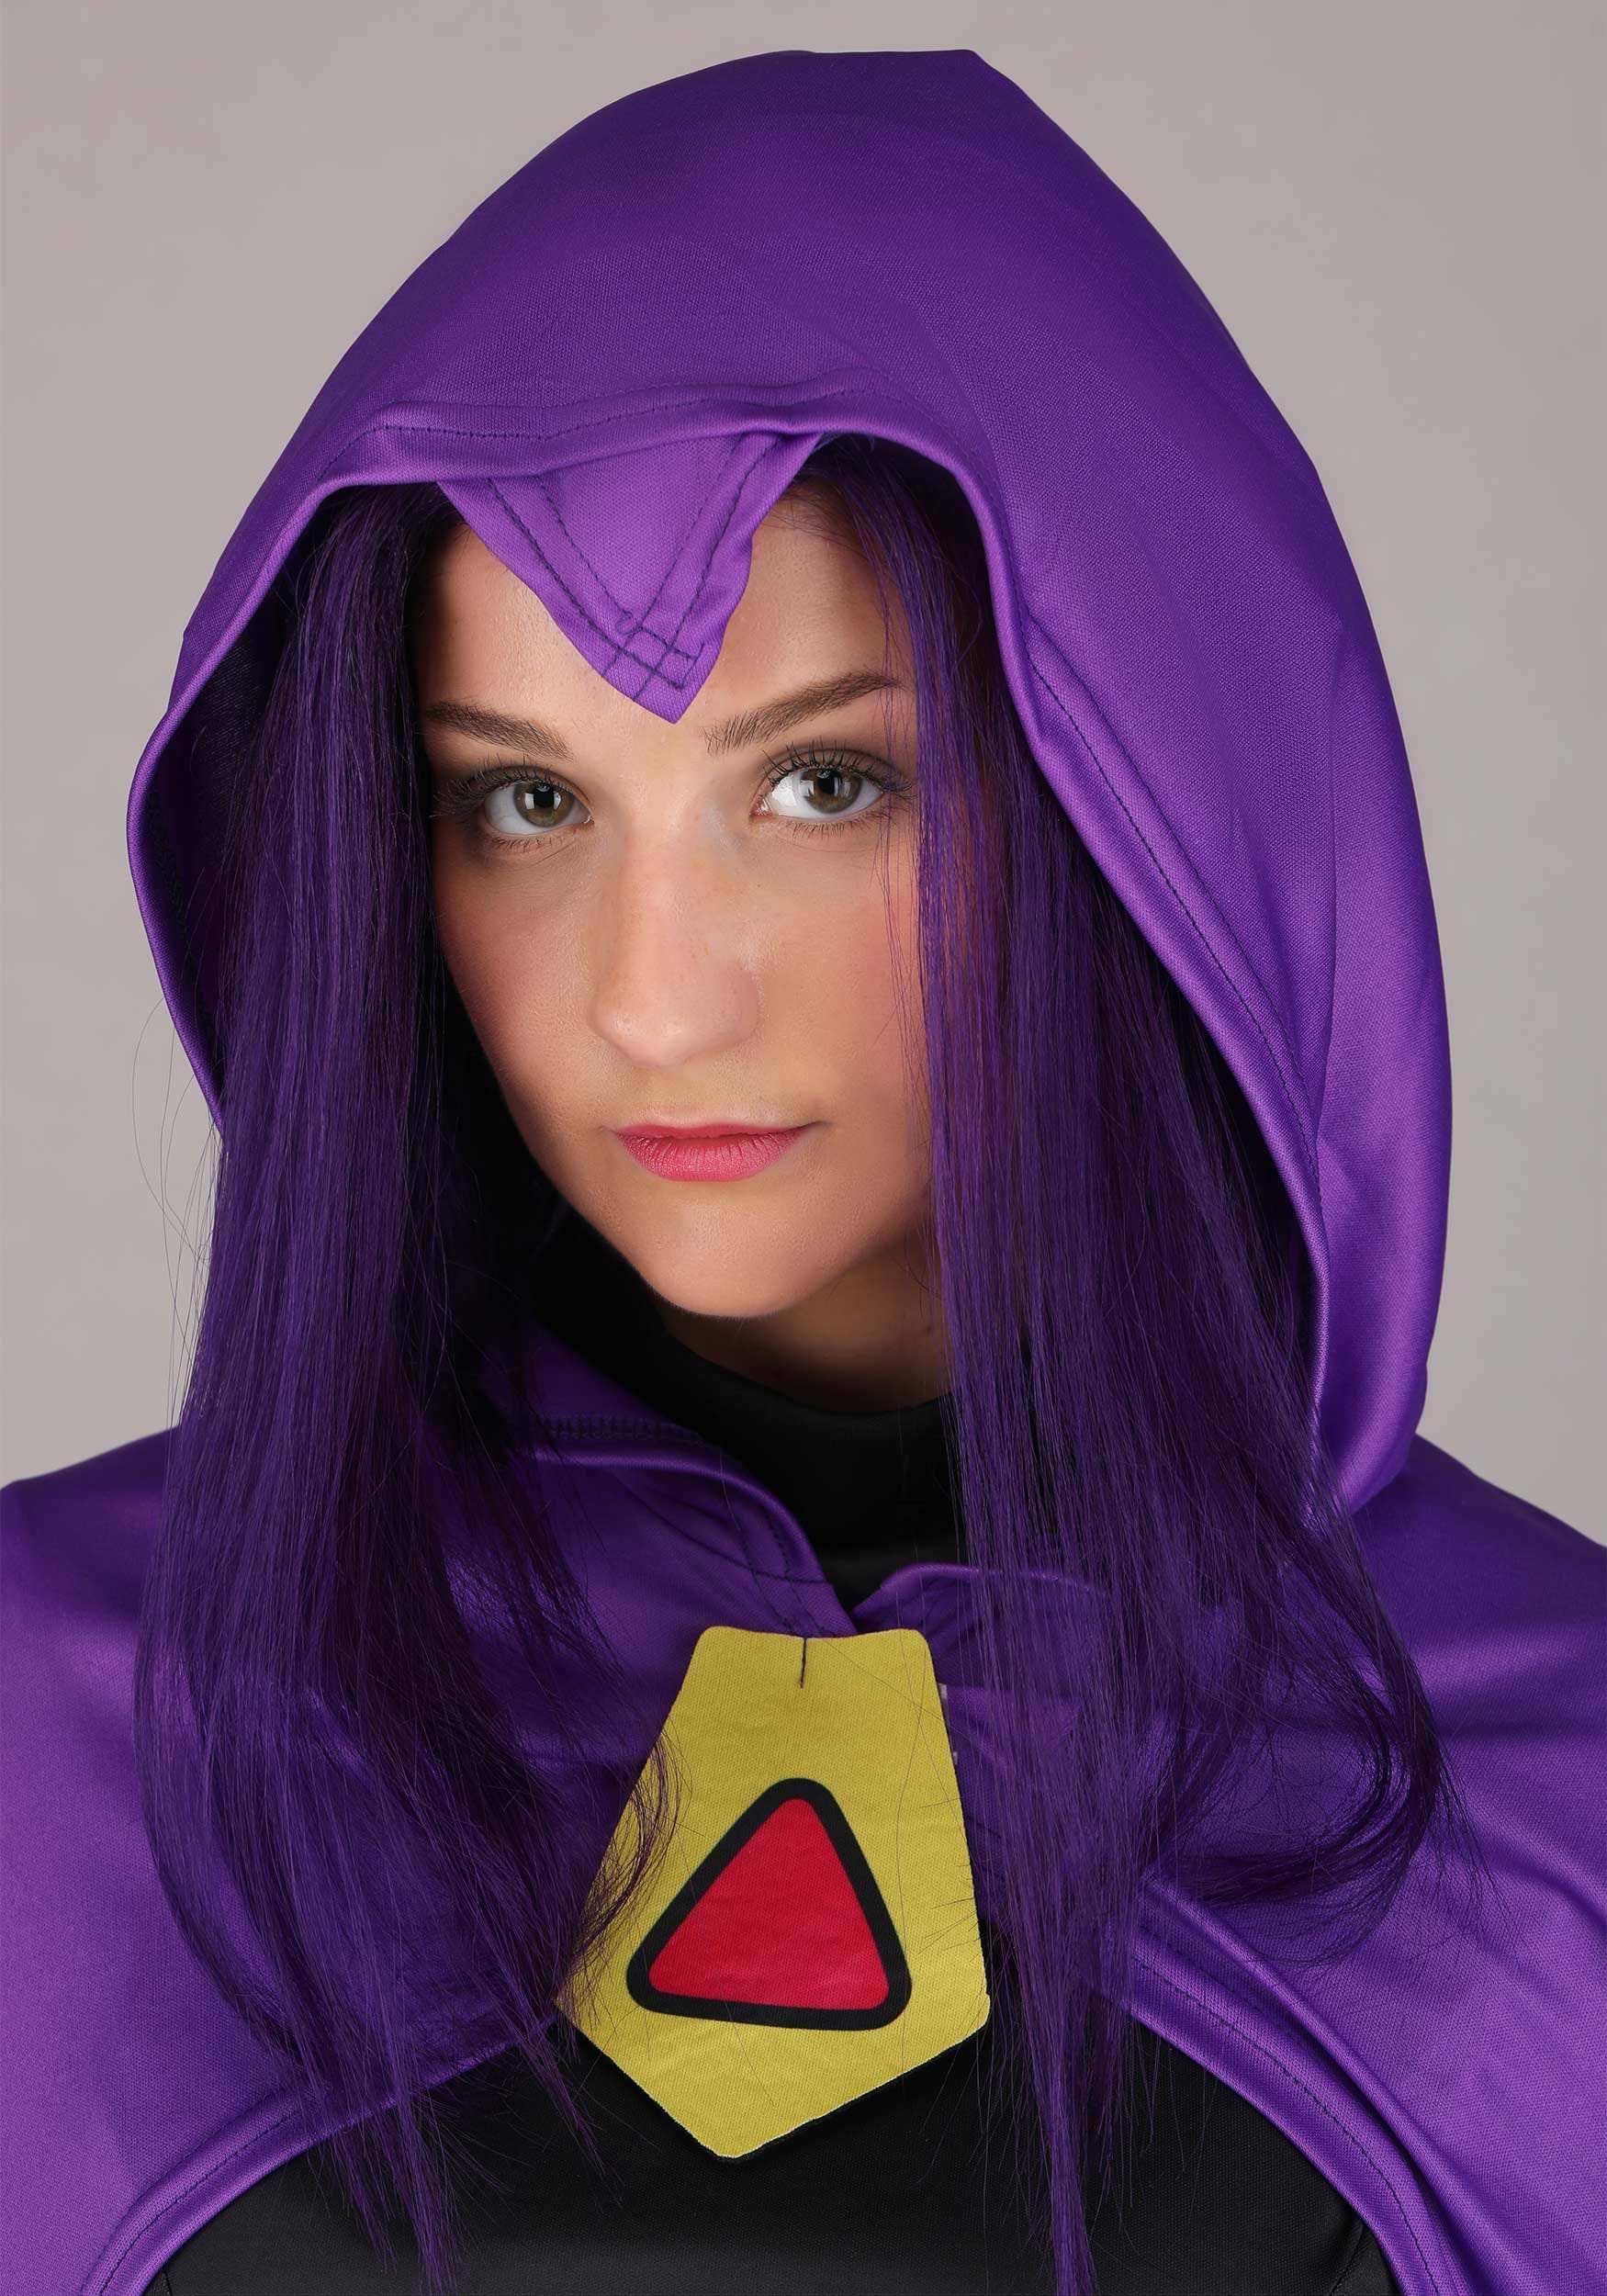 Teen Titans Raven Costume For Women , Cosplay Costume